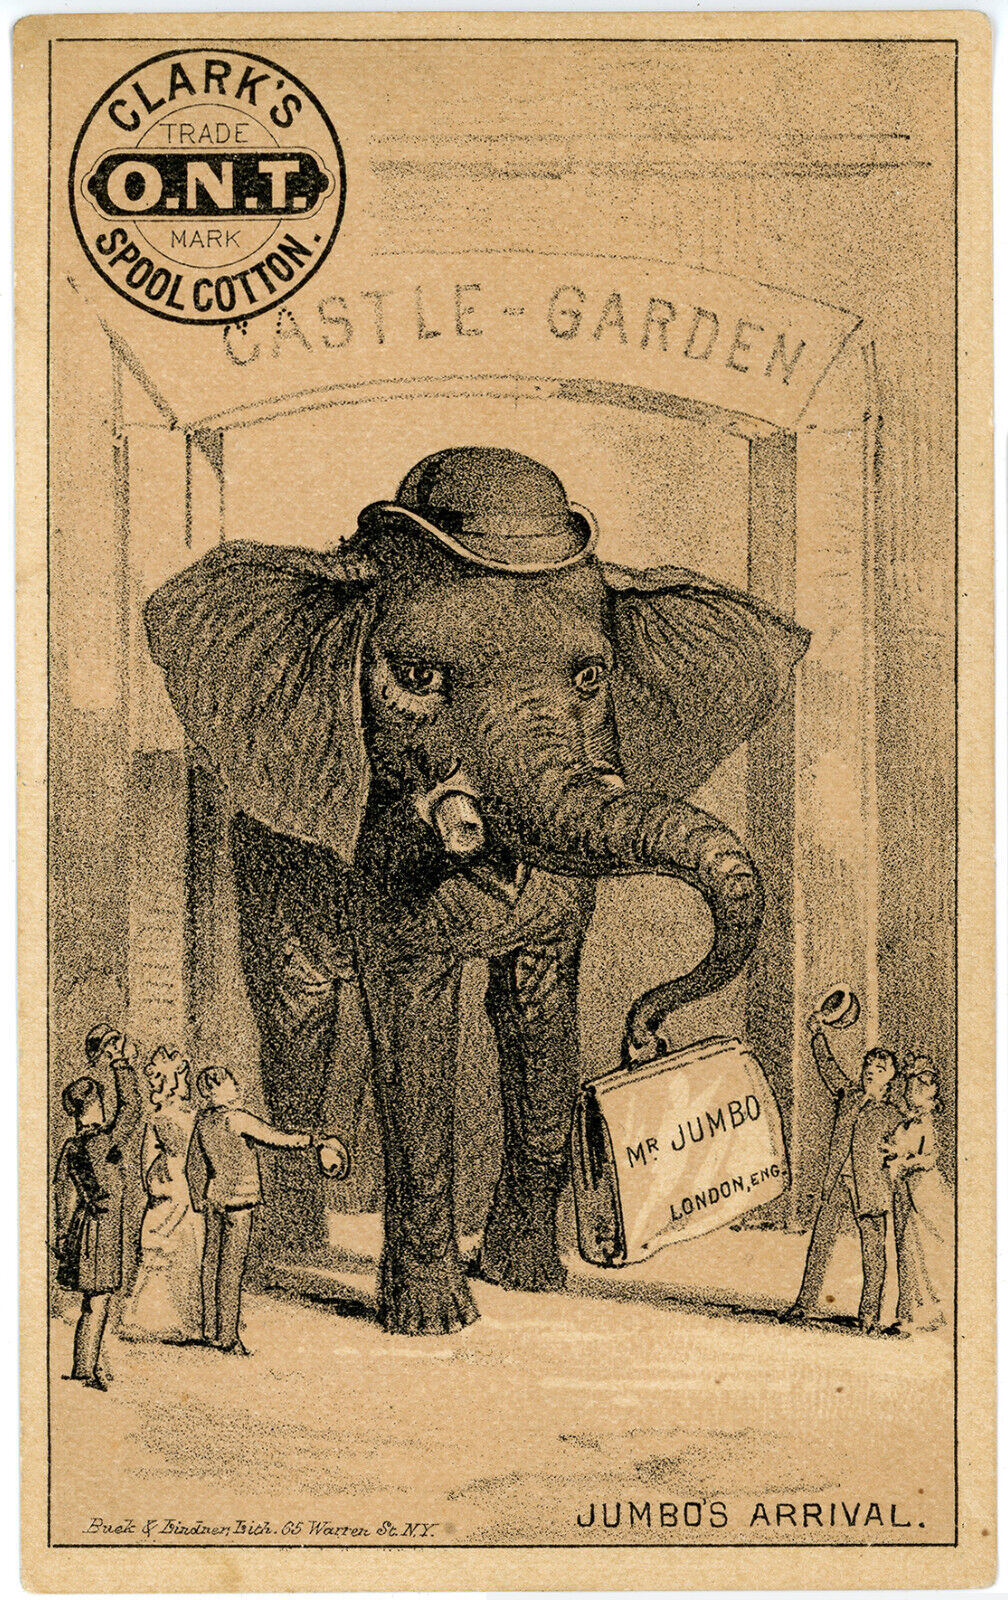 Jumbo Arrival Clarks Spool Cotton 1880s Trade Card Anthropomorphic Elephant